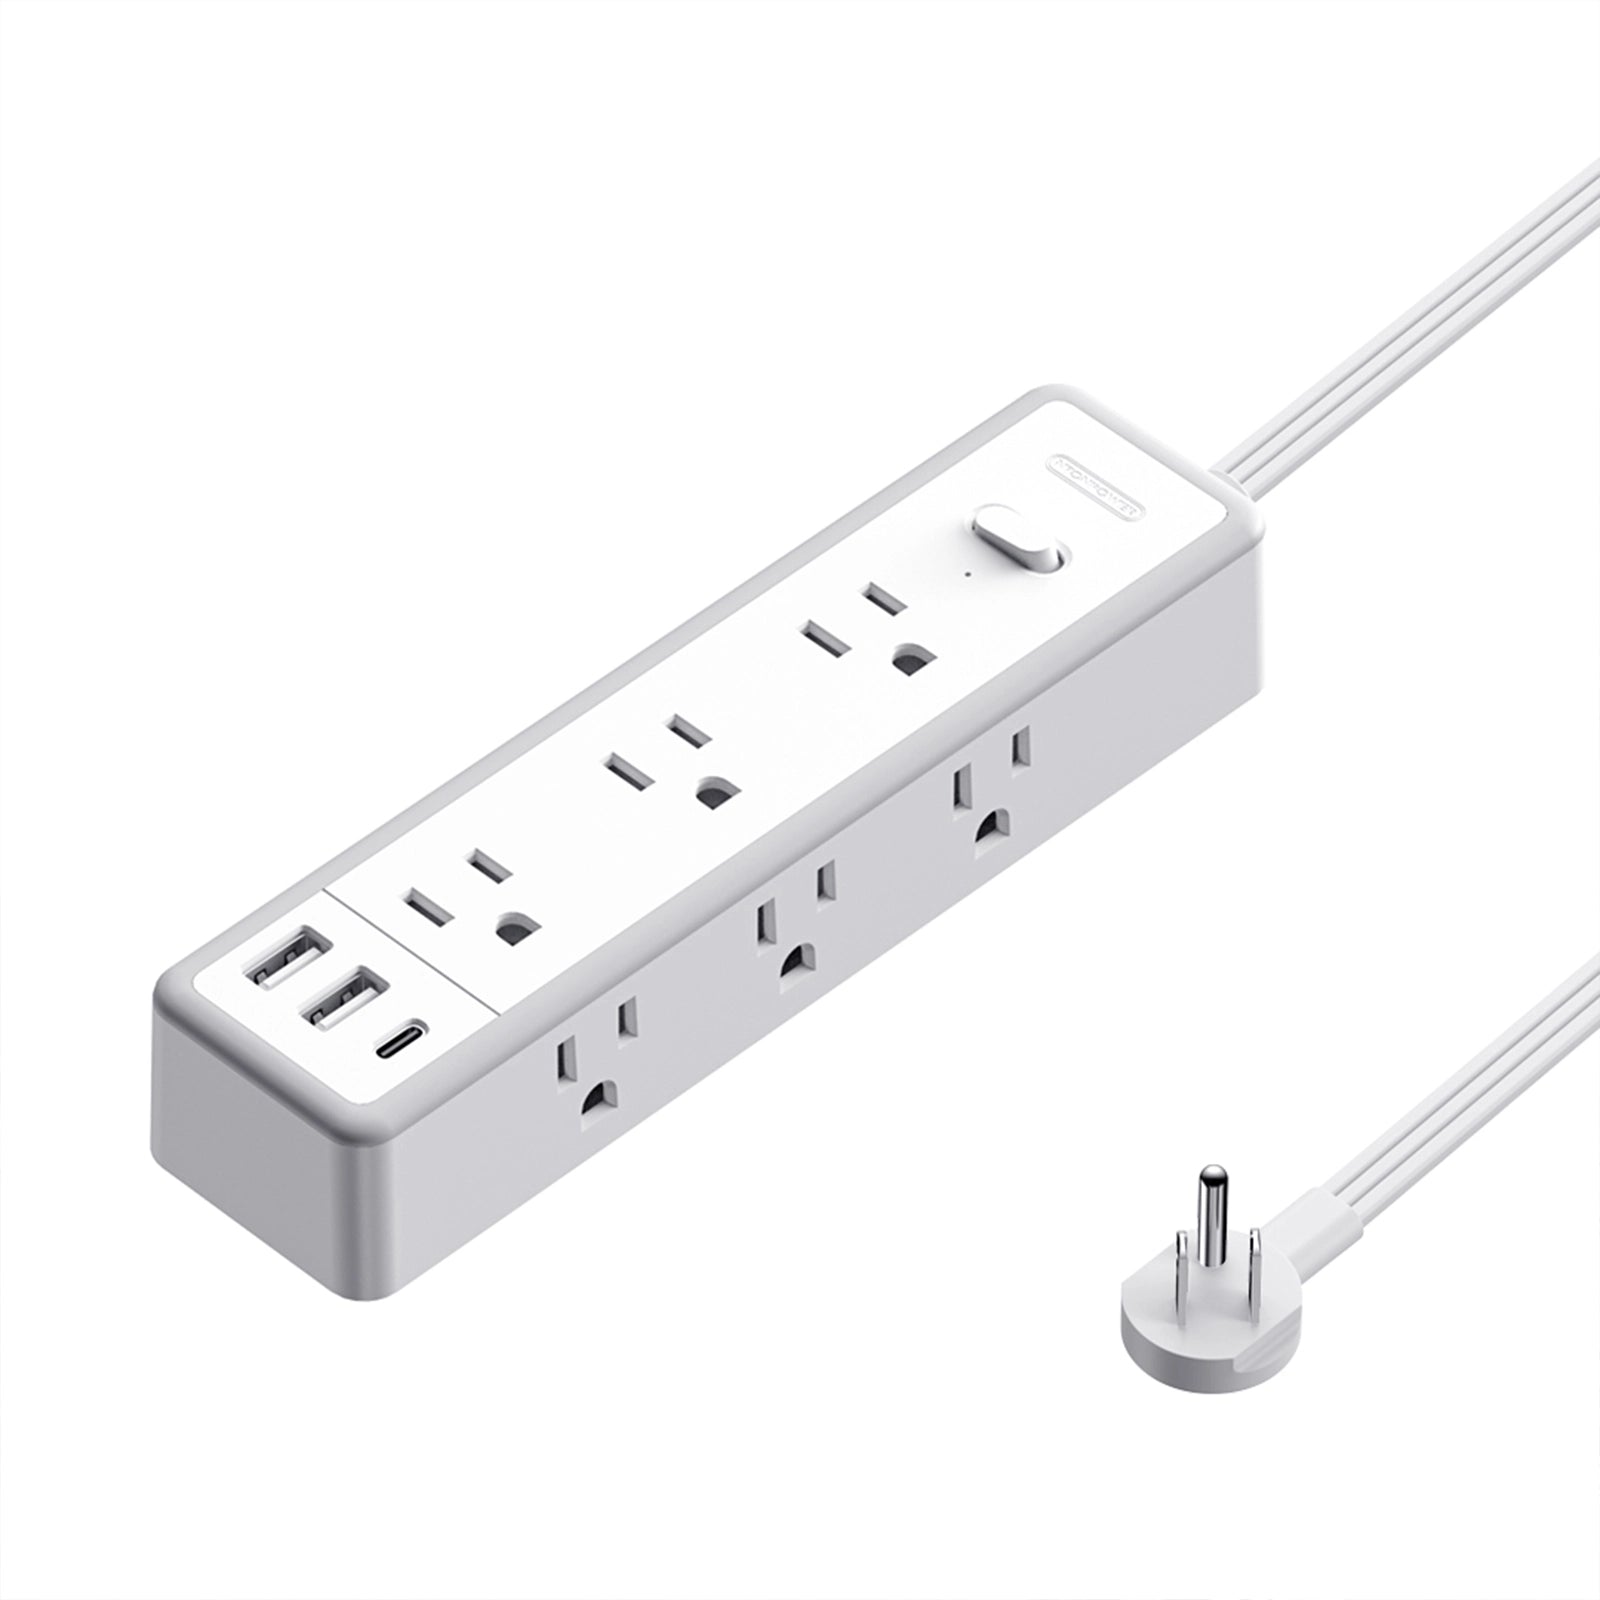 Ntonpower New Power Strip 9 Outlets 2 USB-A 1 USB-C Travel Home Dorm